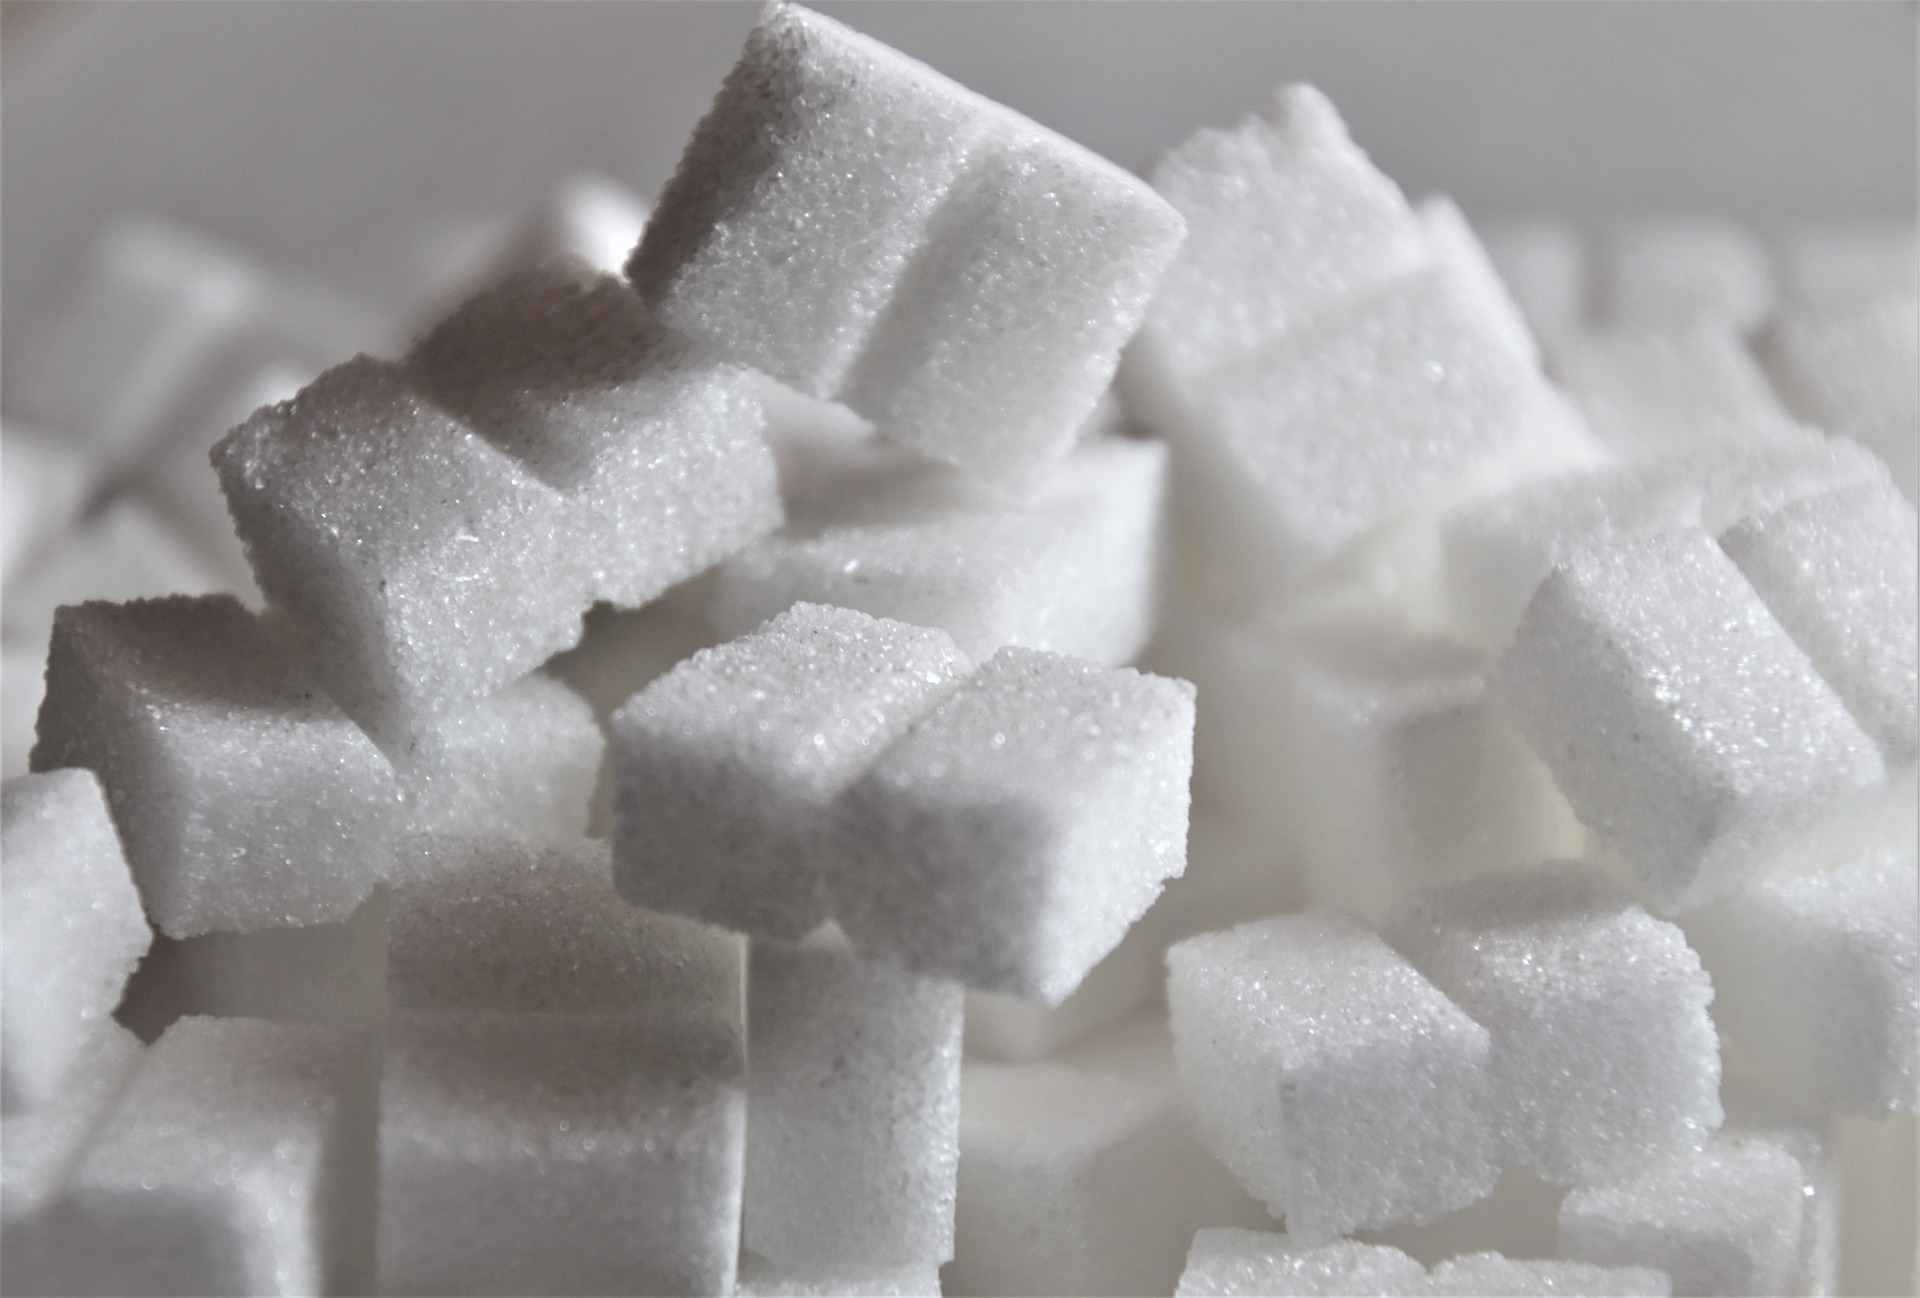 DIAMizin Gurmar [recenze]: Udrží hladinu cukru na uzdě?